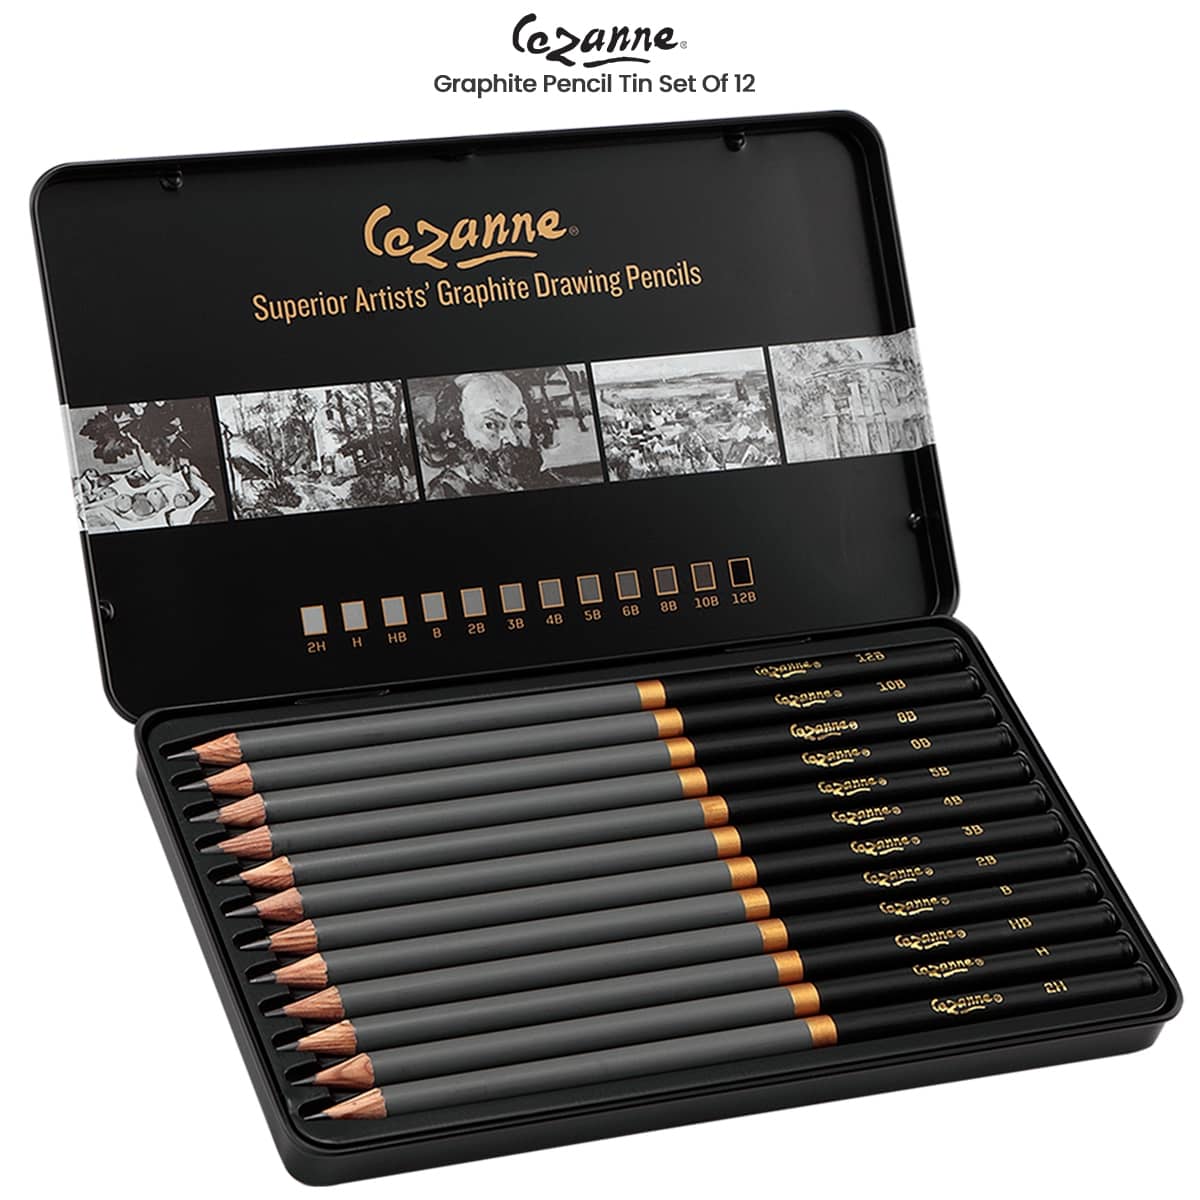 https://www.jerrysartarama.com/media/catalog/product/c/e/cezanne-graphite-pencil-tin-set-12-graphite-pencils-main.jpg